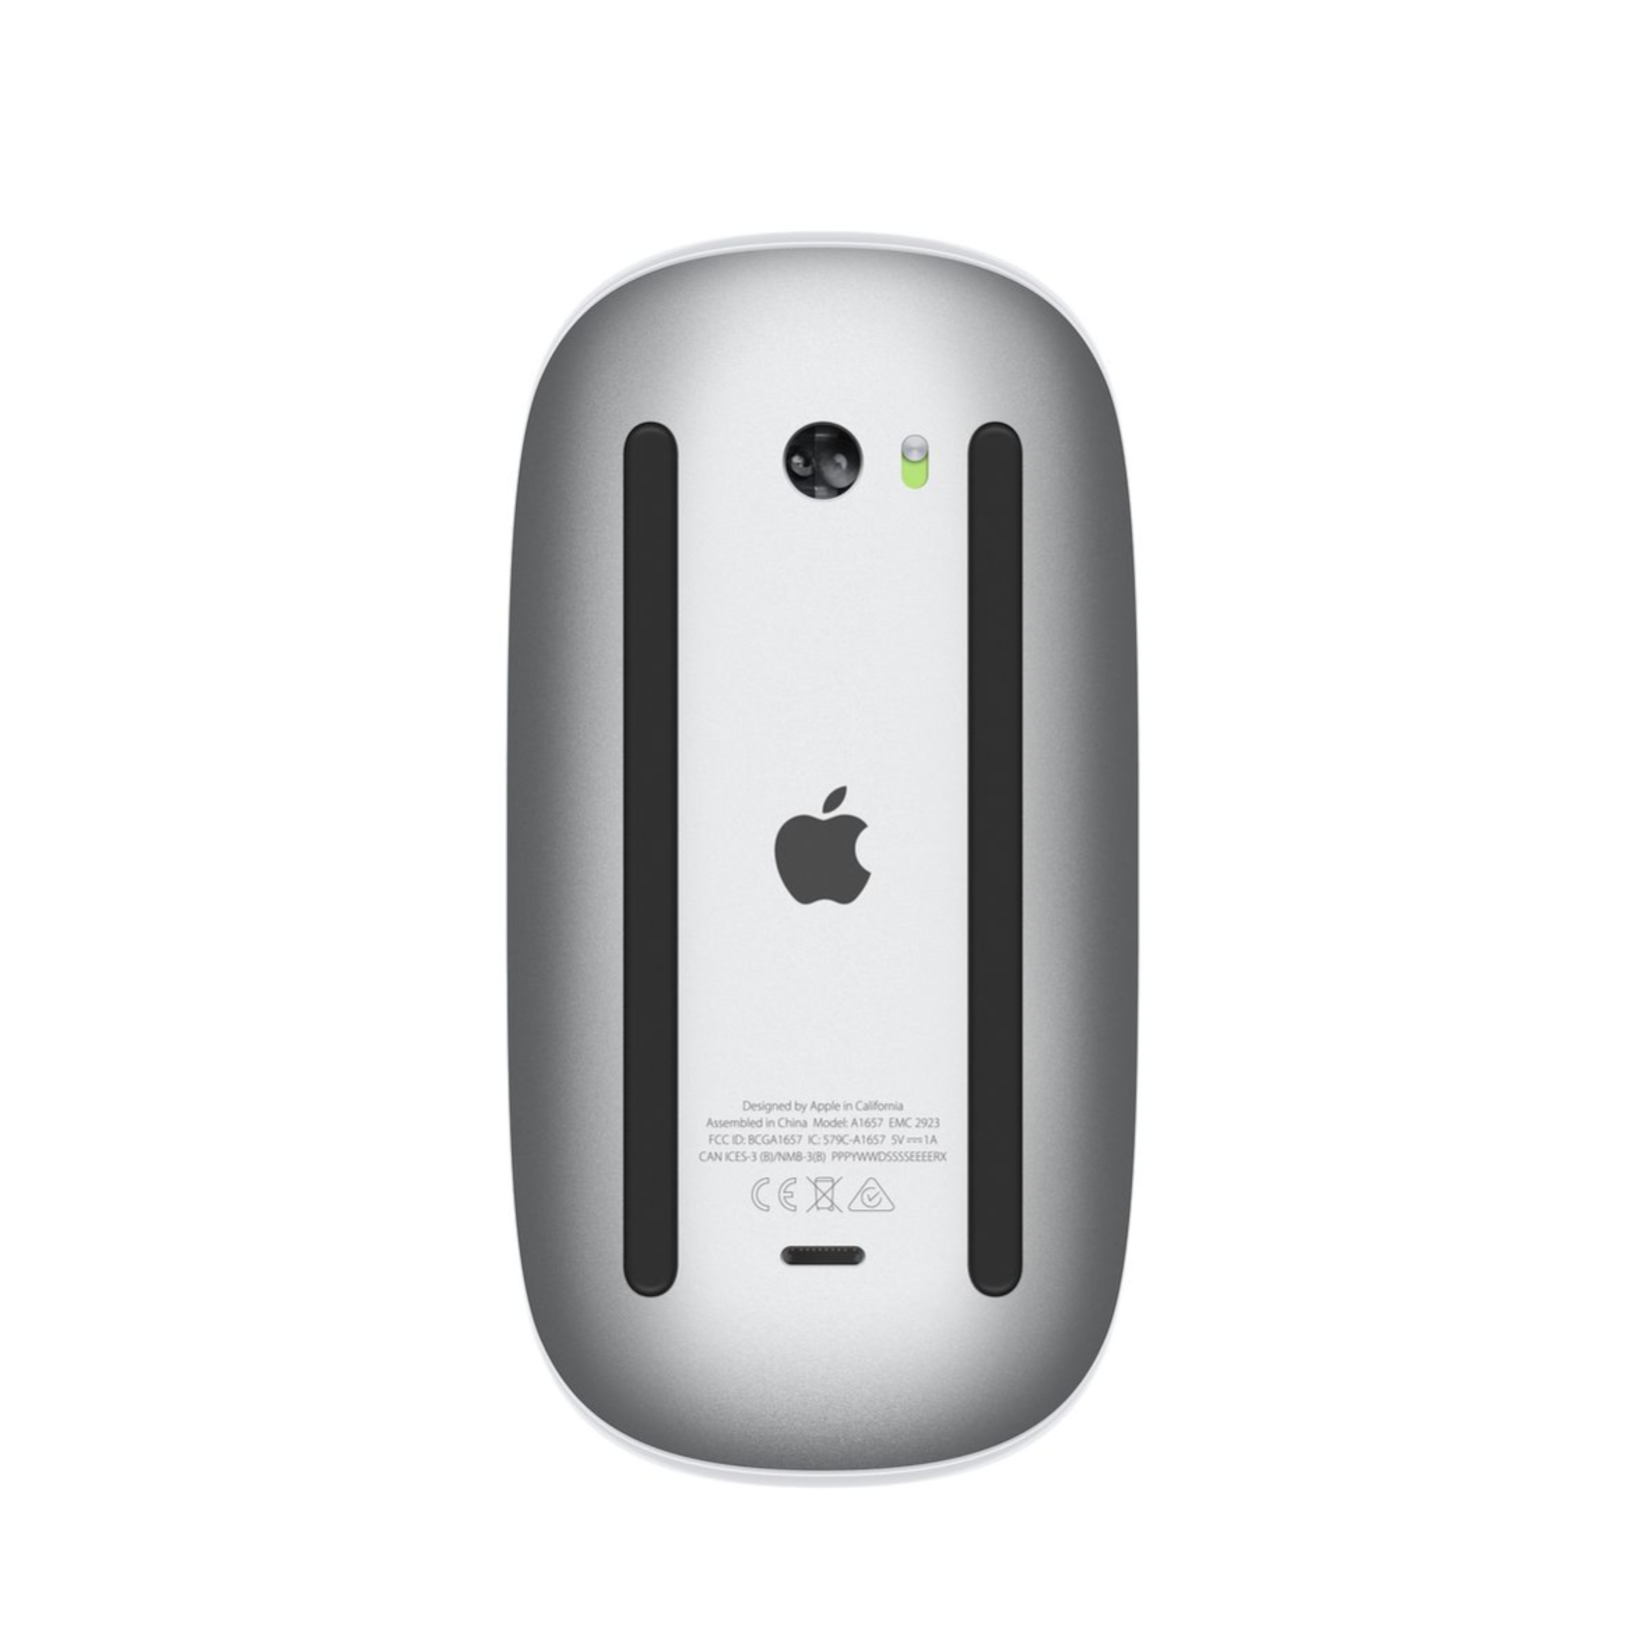 Apple Magic Mouse - White